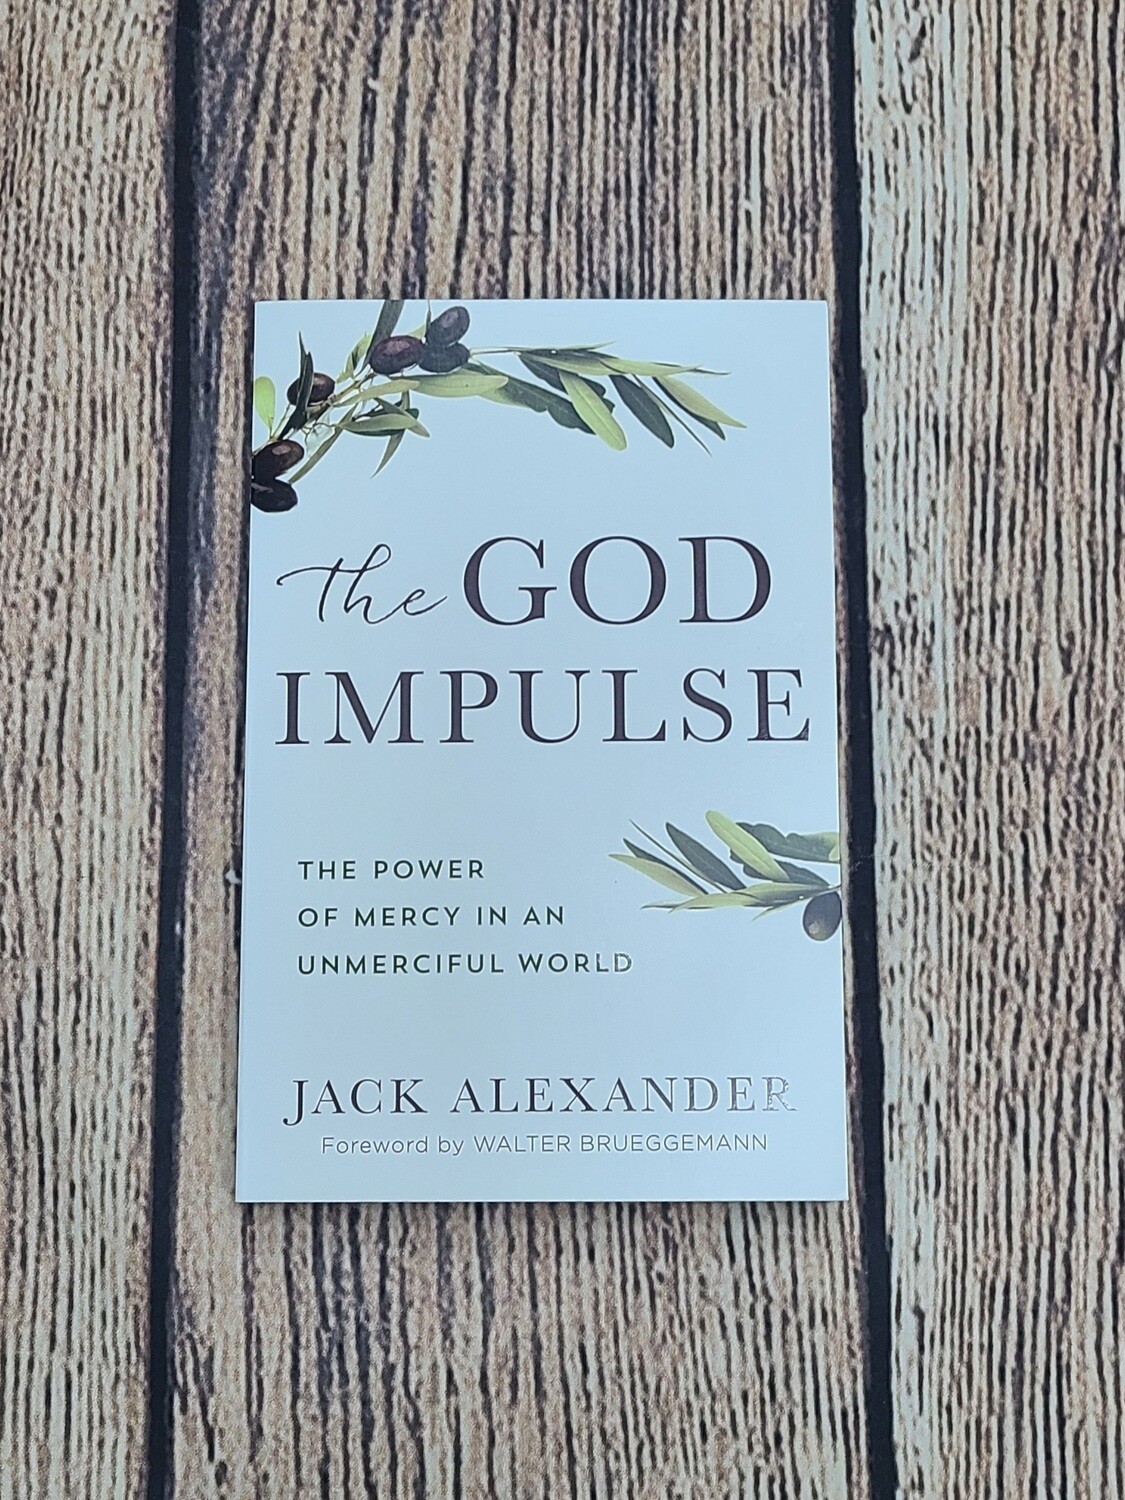 The God Impulse by Jack Alexander